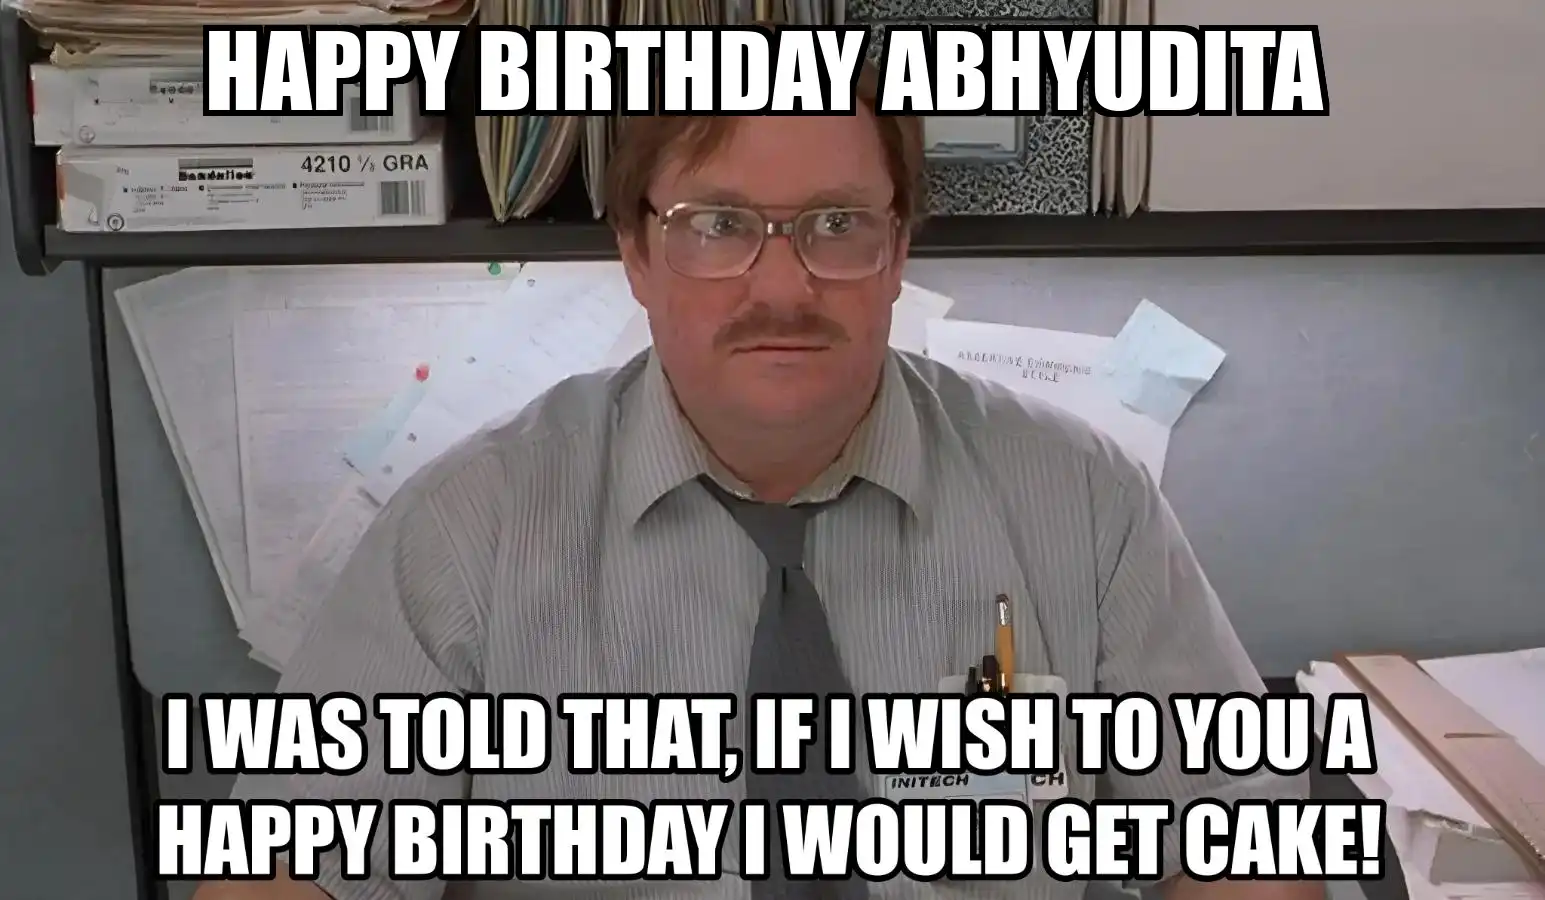 Happy Birthday Abhyudita I Would Get A Cake Meme